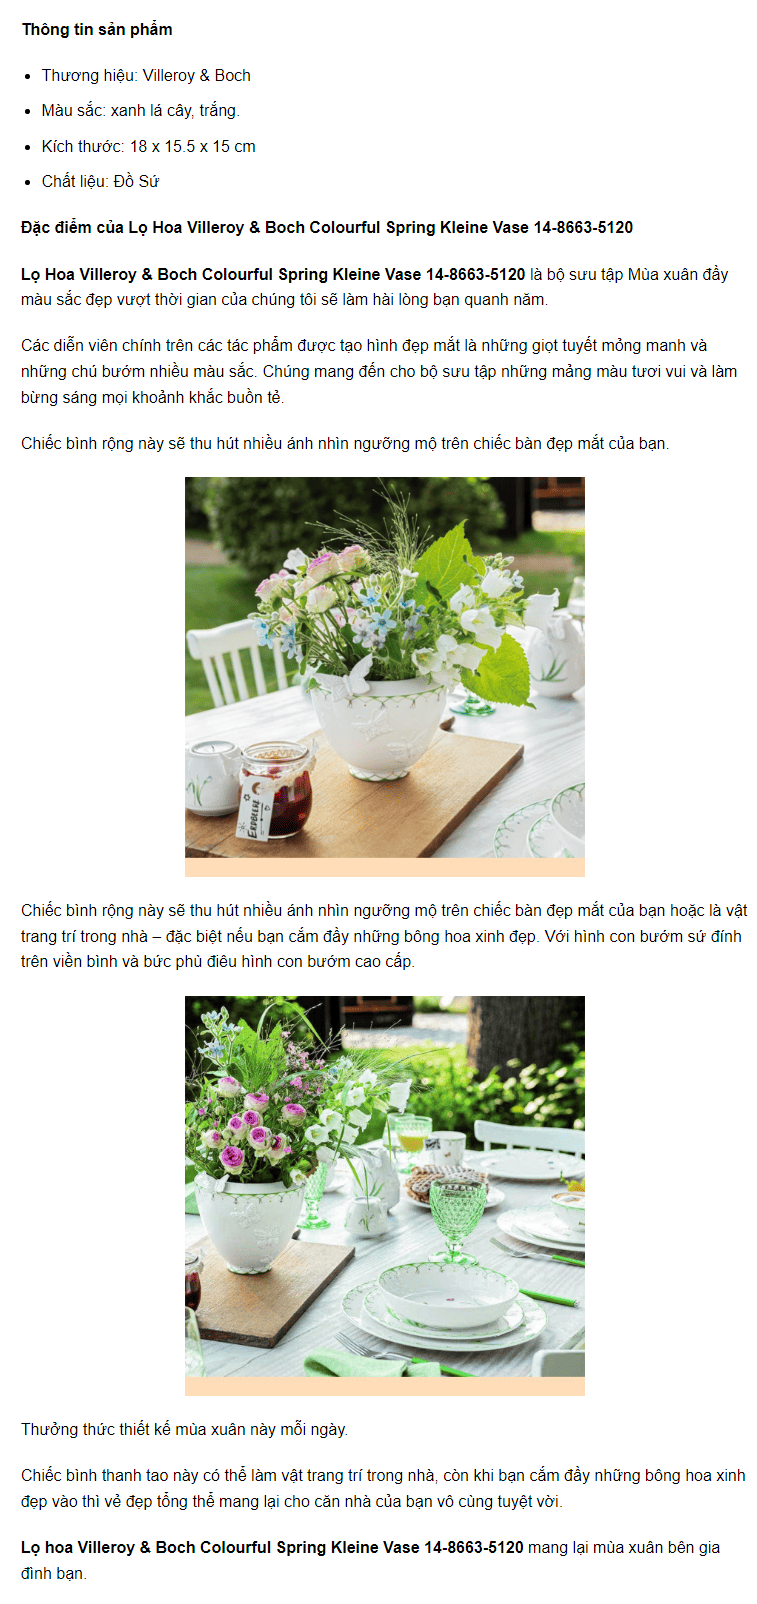 Lọ Hoa Villeroy & Boch Colourful Spring Kleine Vase 14-8663-5120